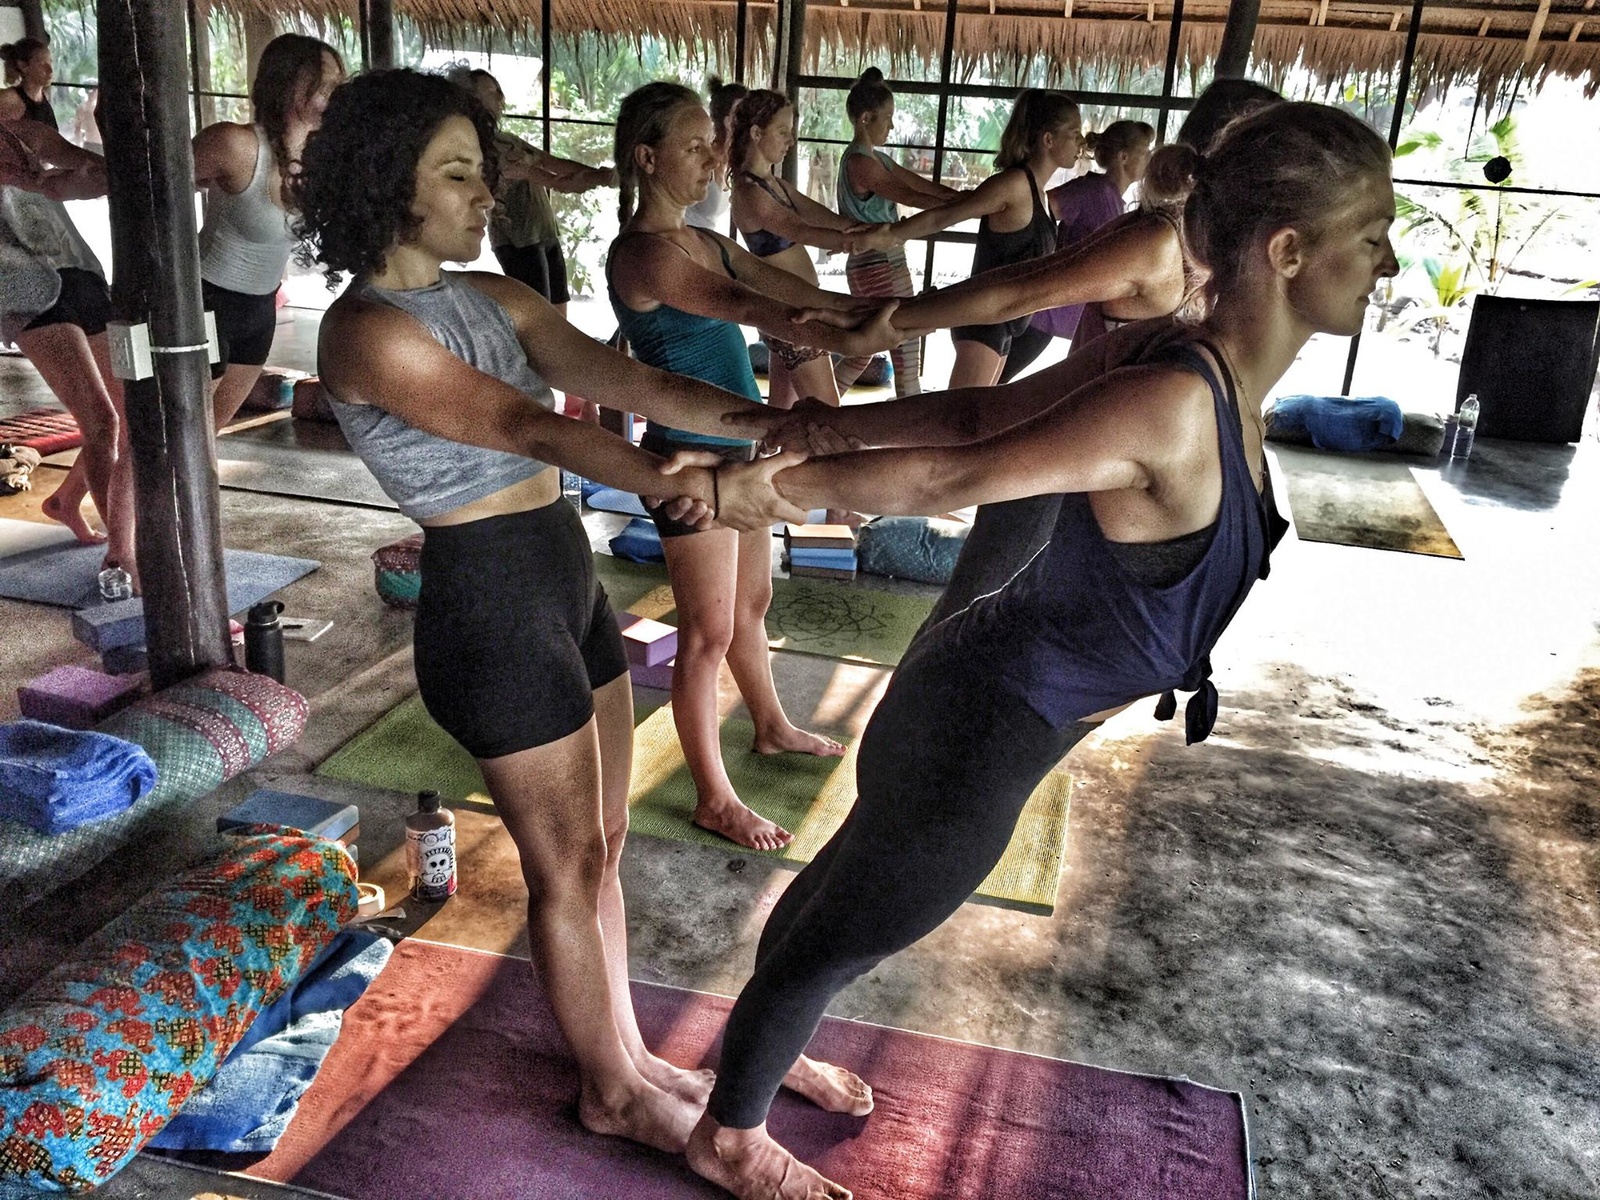 200-hrs alignment & intro to therapeutic yoga ttc at luna alignment koh phangan, thailand000181515623730.jpg